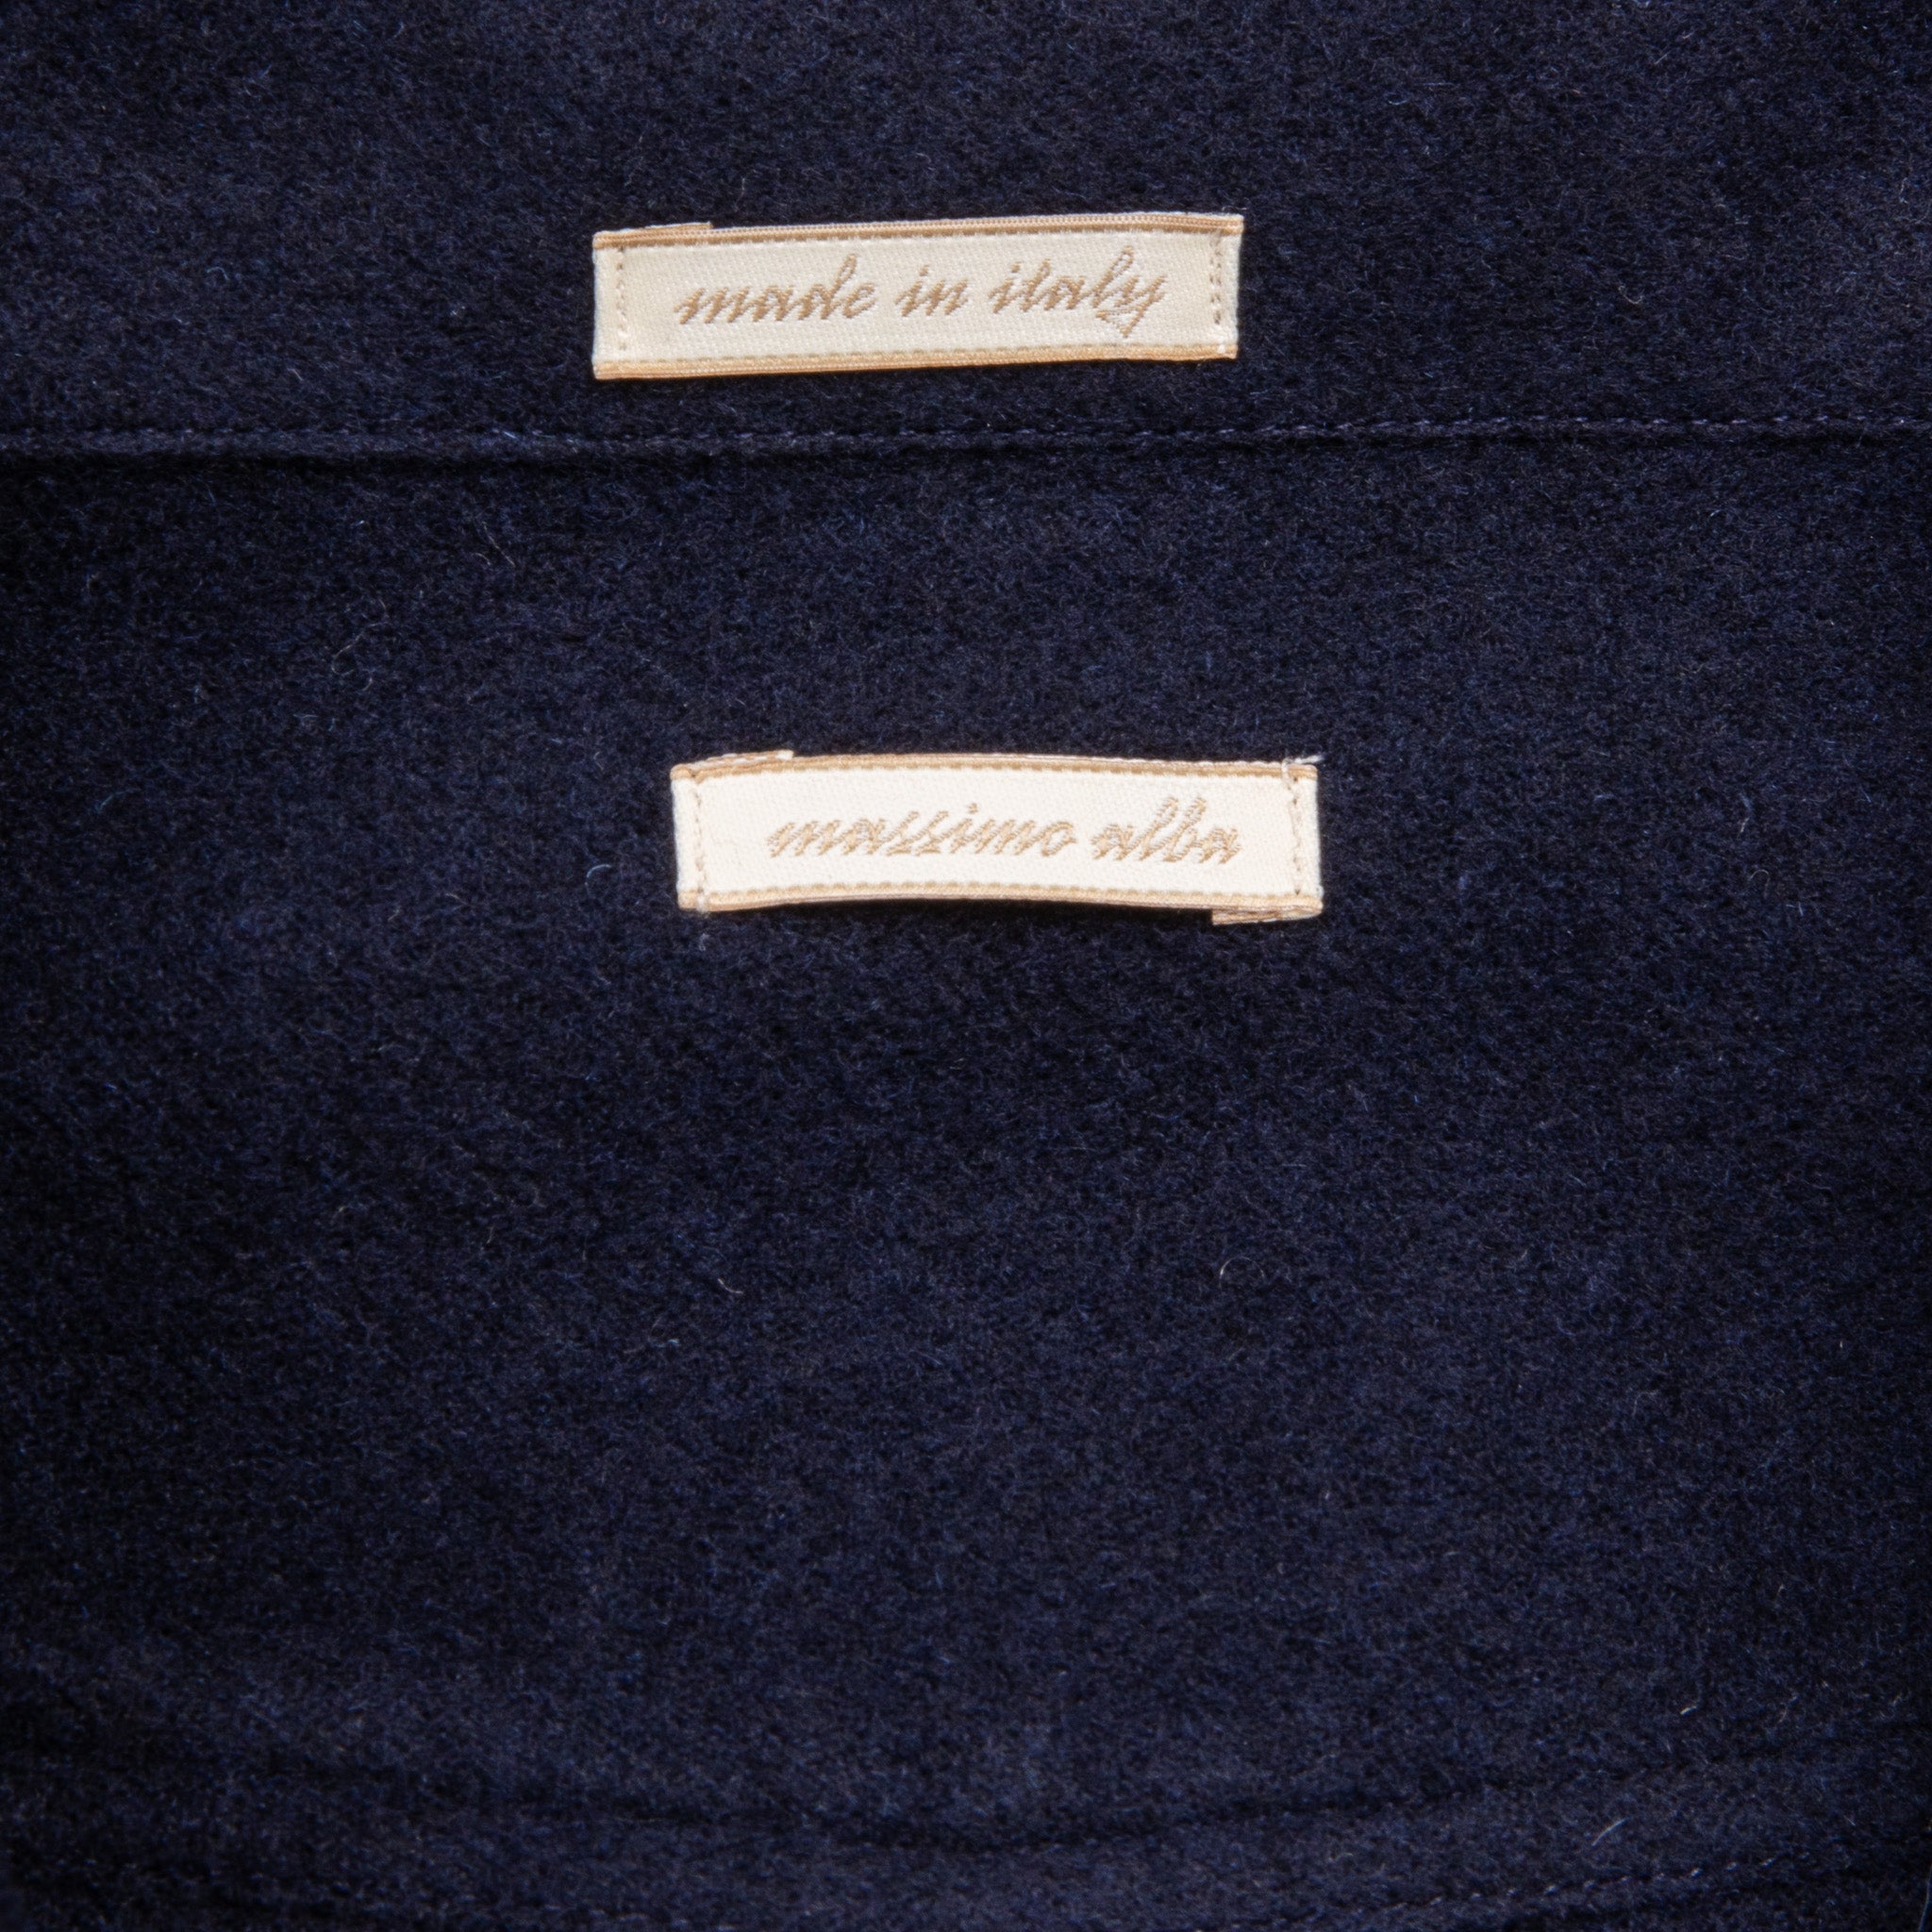 Massimo Alba Florida Shirt Jacket Dark blue